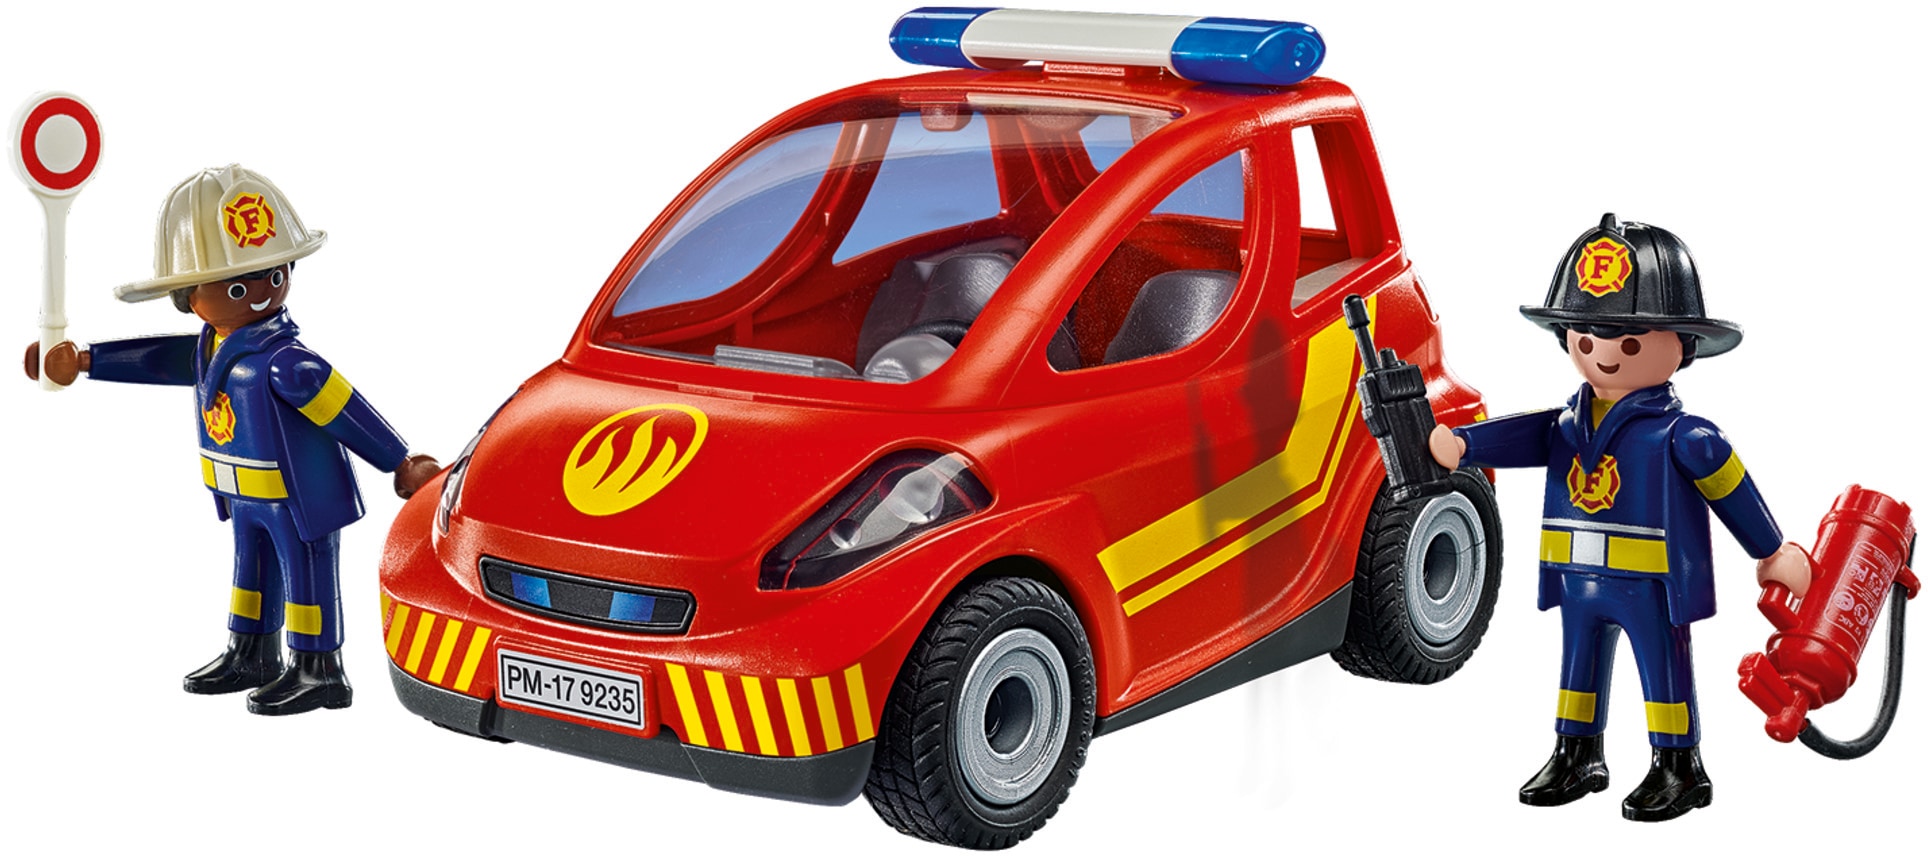 Playmobil® Konstruktions-Spielset »Feuerwehr Kleinwagen (71035), City-Action«, (27 St.), Made in Germany